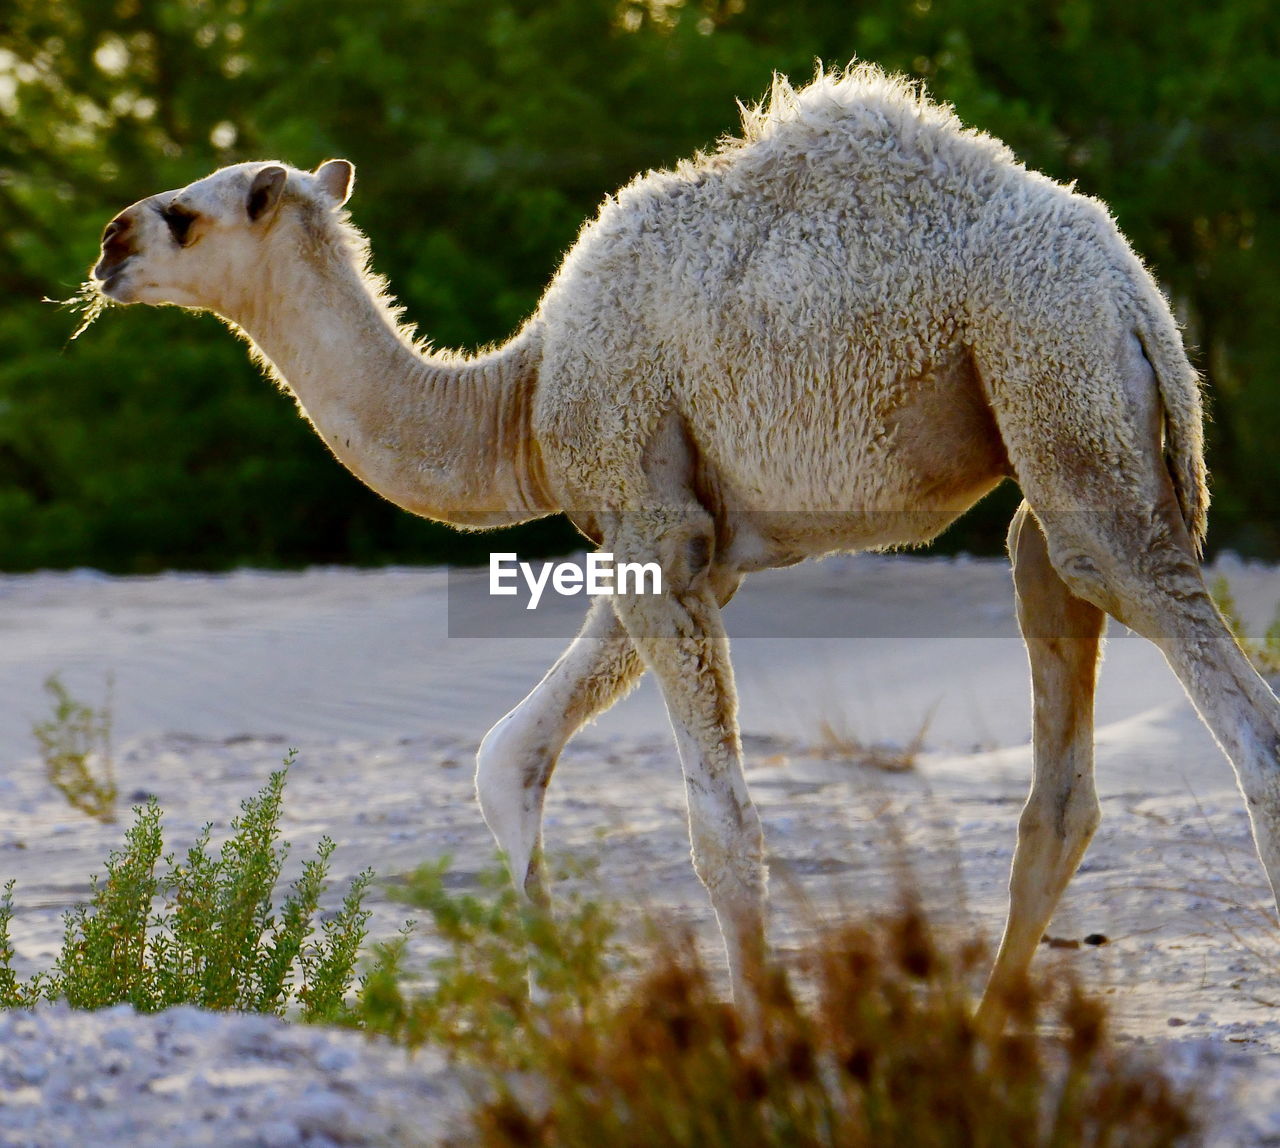 Desert camels in the wilderness in saudi arabia